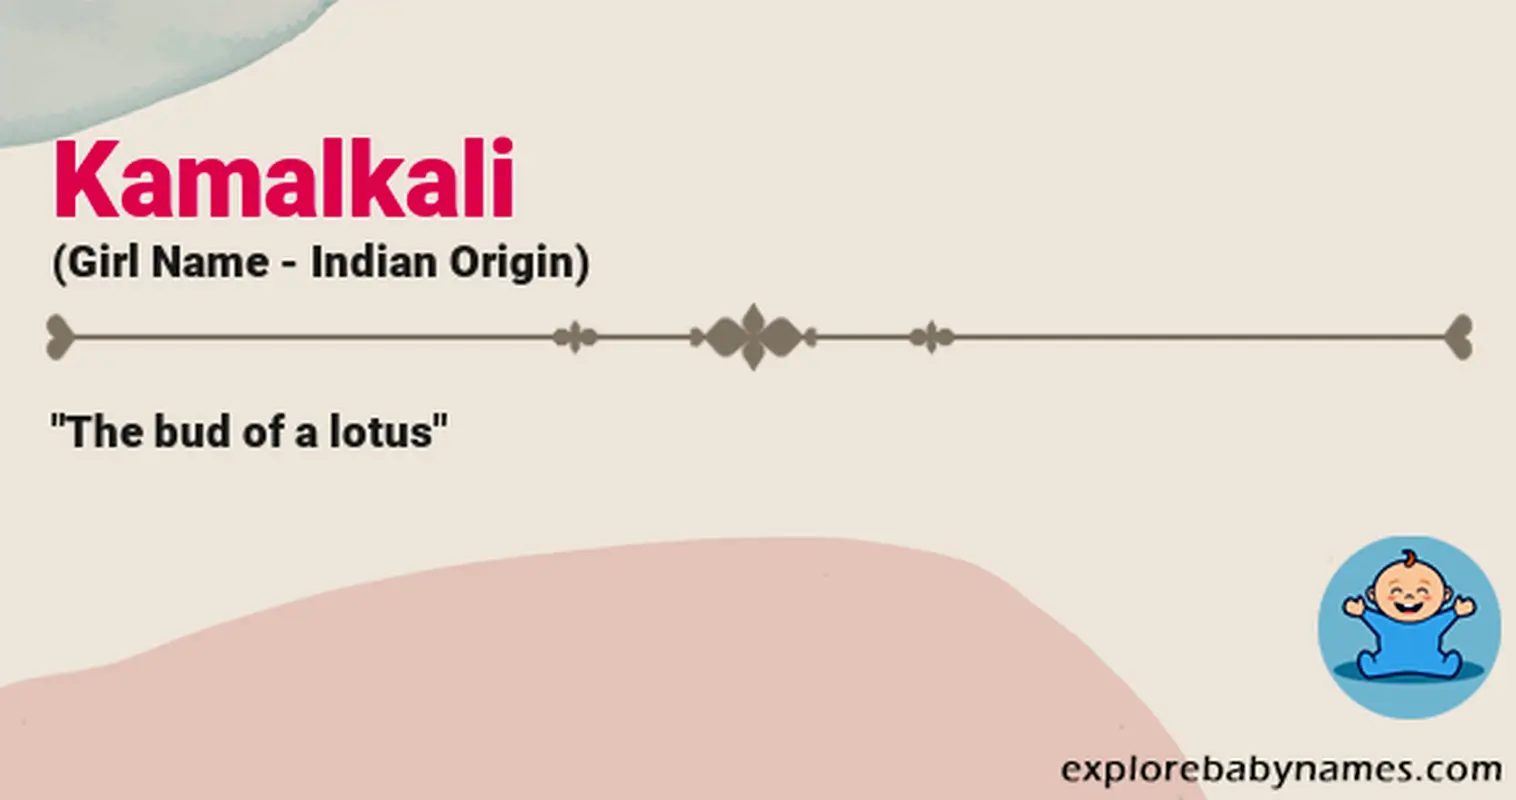 Meaning of Kamalkali